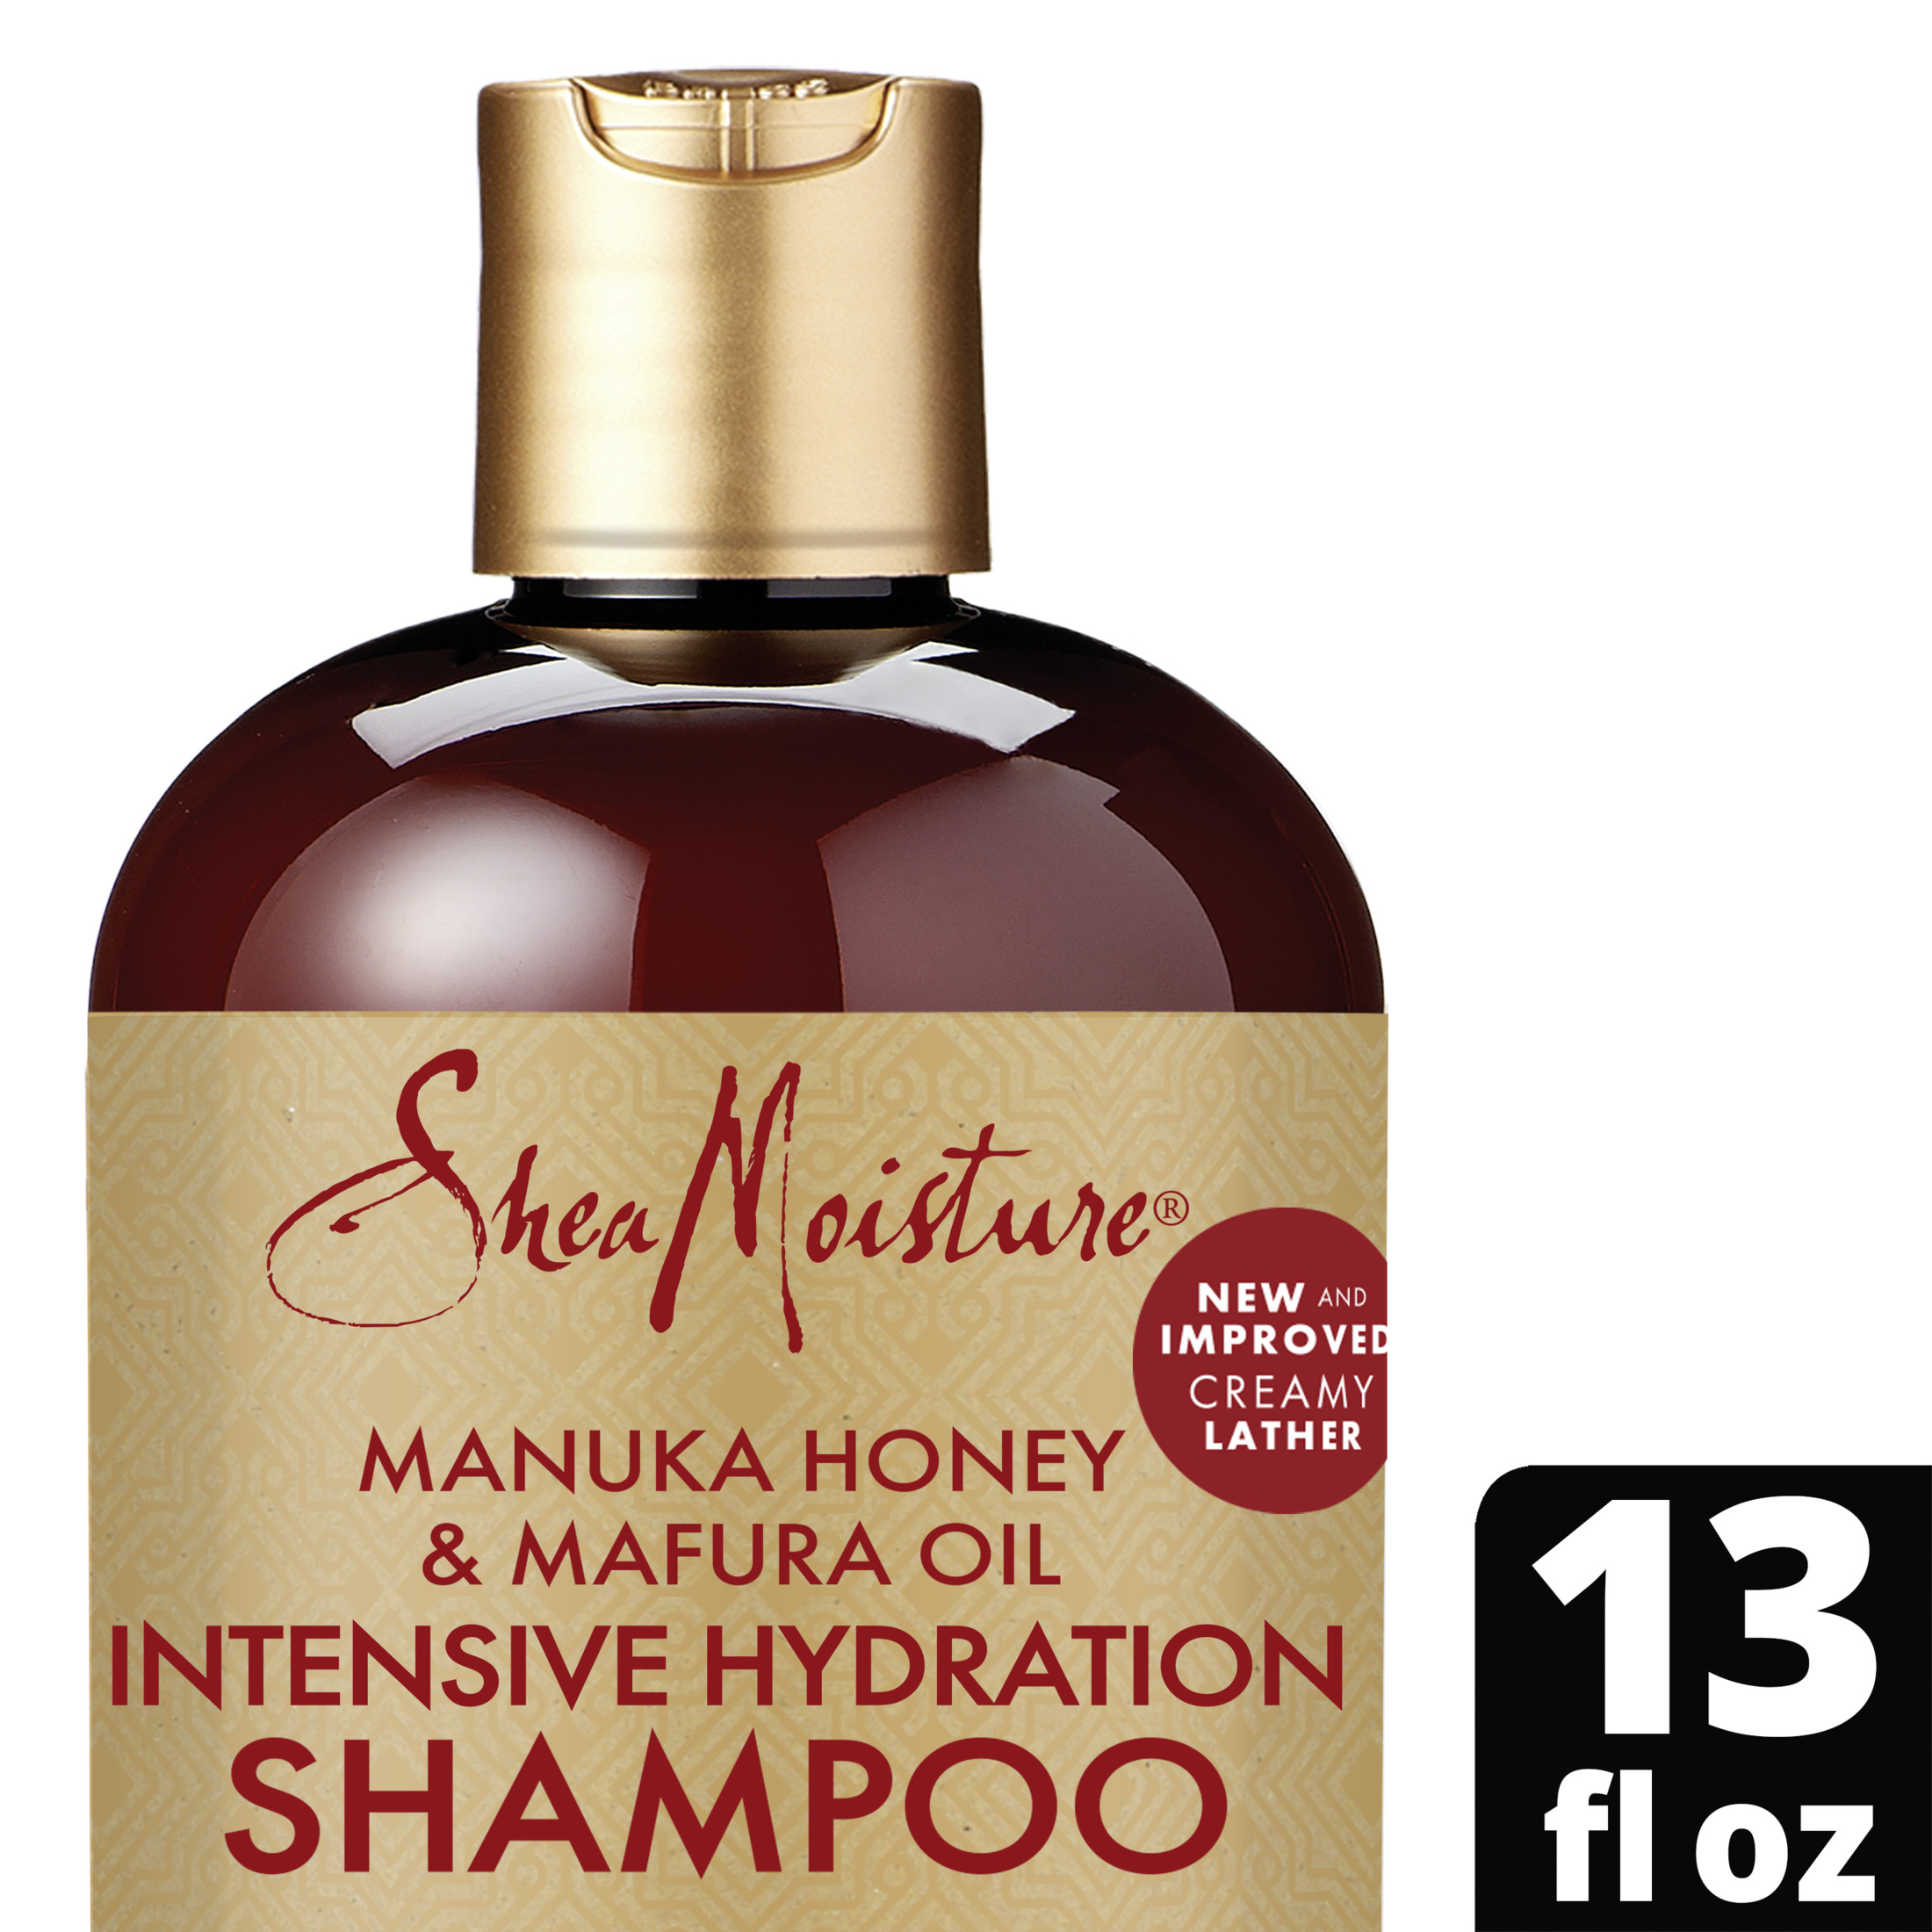 SheaMoisture Intensive Hydration Daily Shampoo for Damaged Hair, Manuka Honey & Mafura Oil, 13 fl oz - image 3 of 15